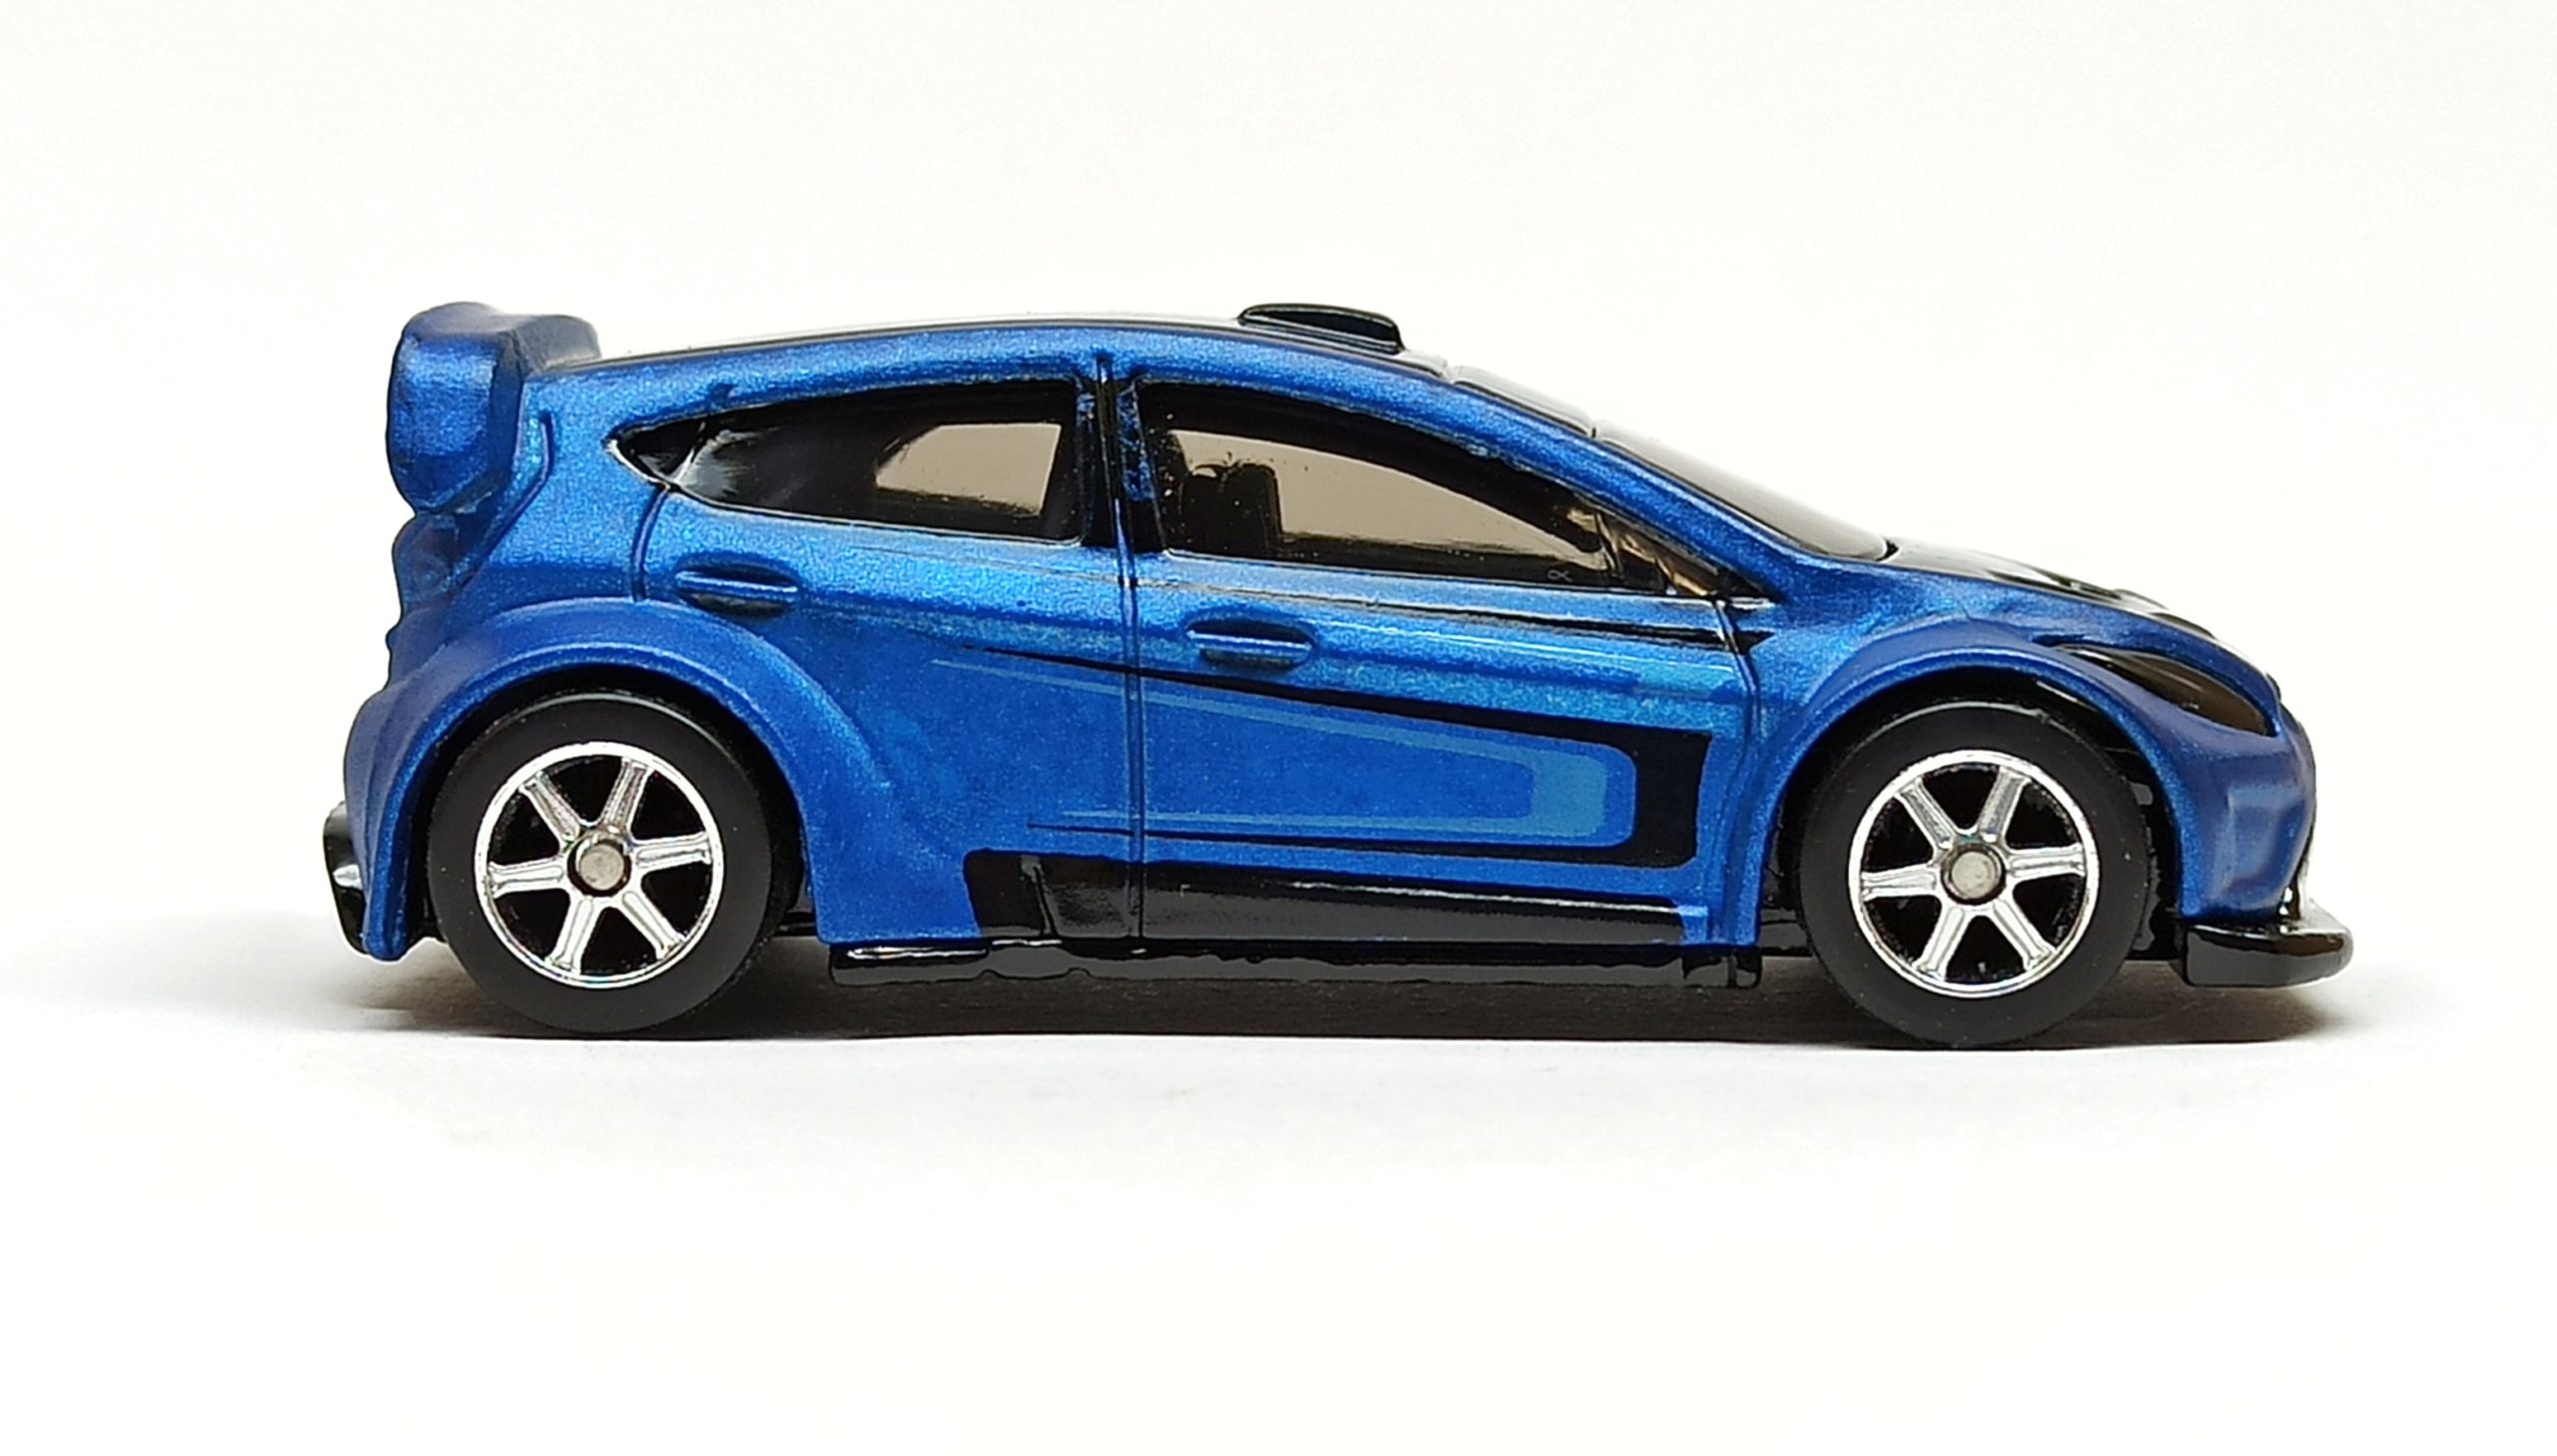 Hot Wheels '12 Ford Fiesta (X8294) 2013 Boulevard satin blue